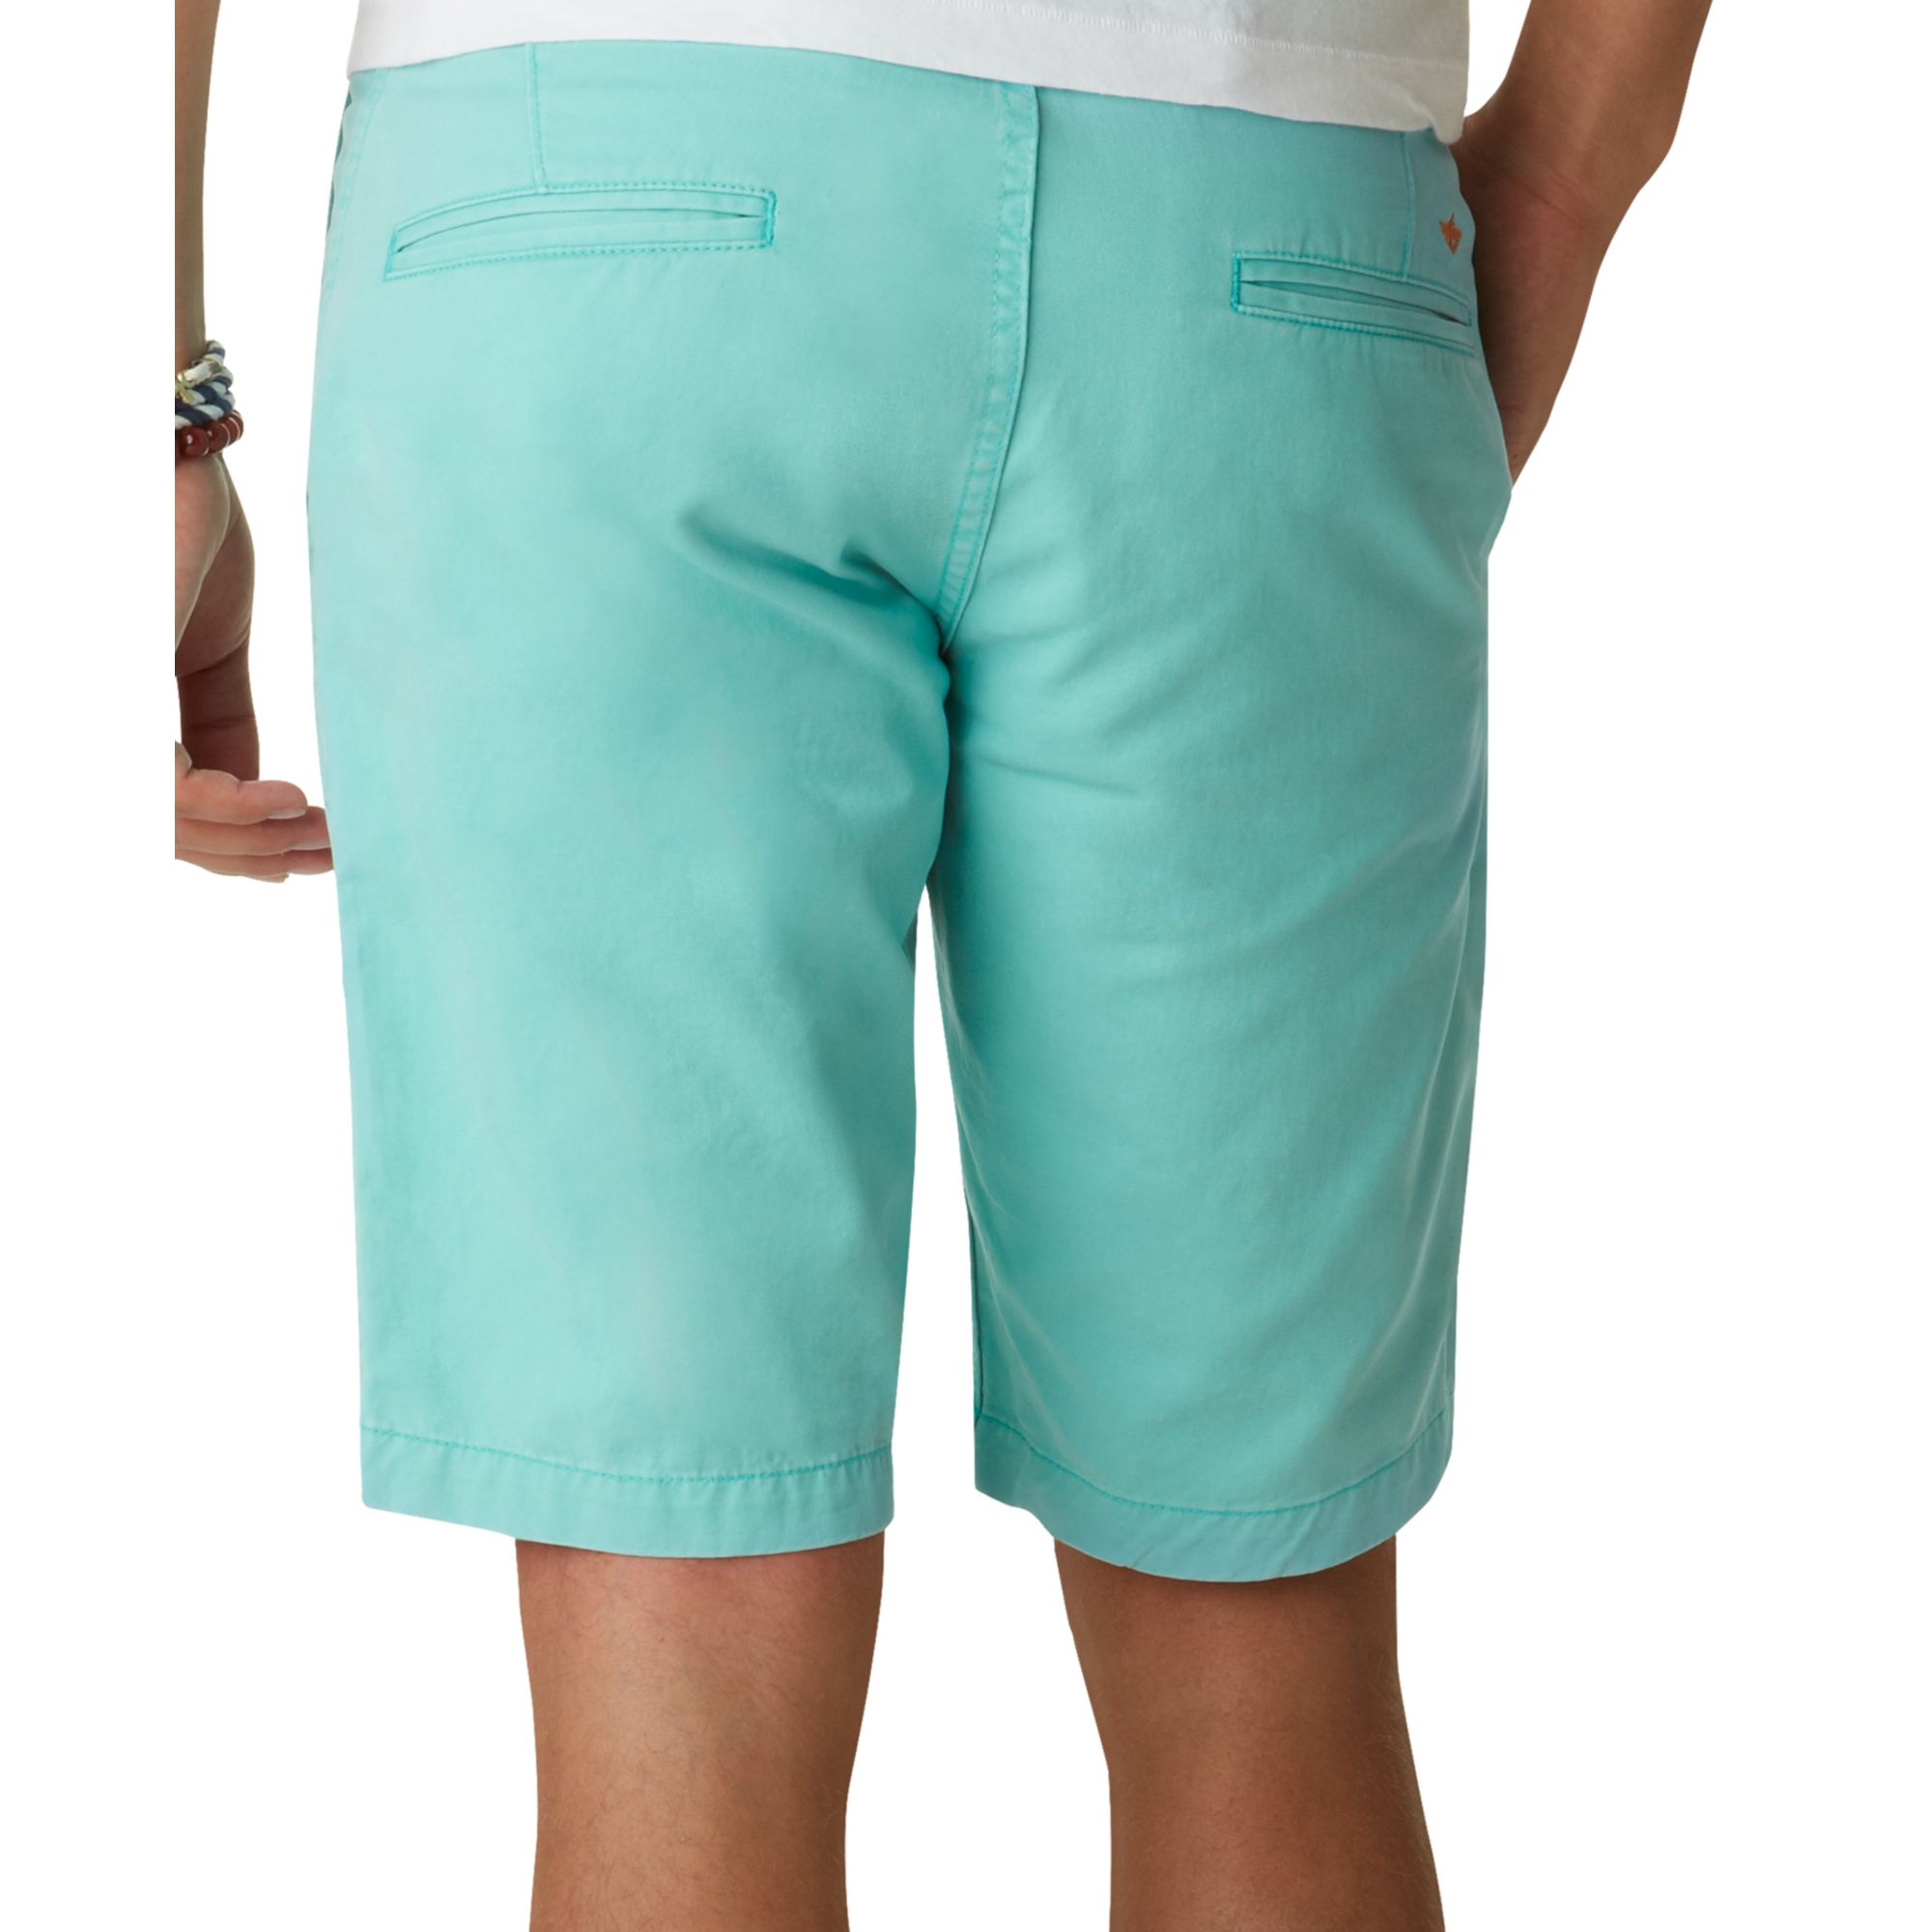 Lyst - Dockers Alpha Flat Front Khaki Shorts in Blue for Men